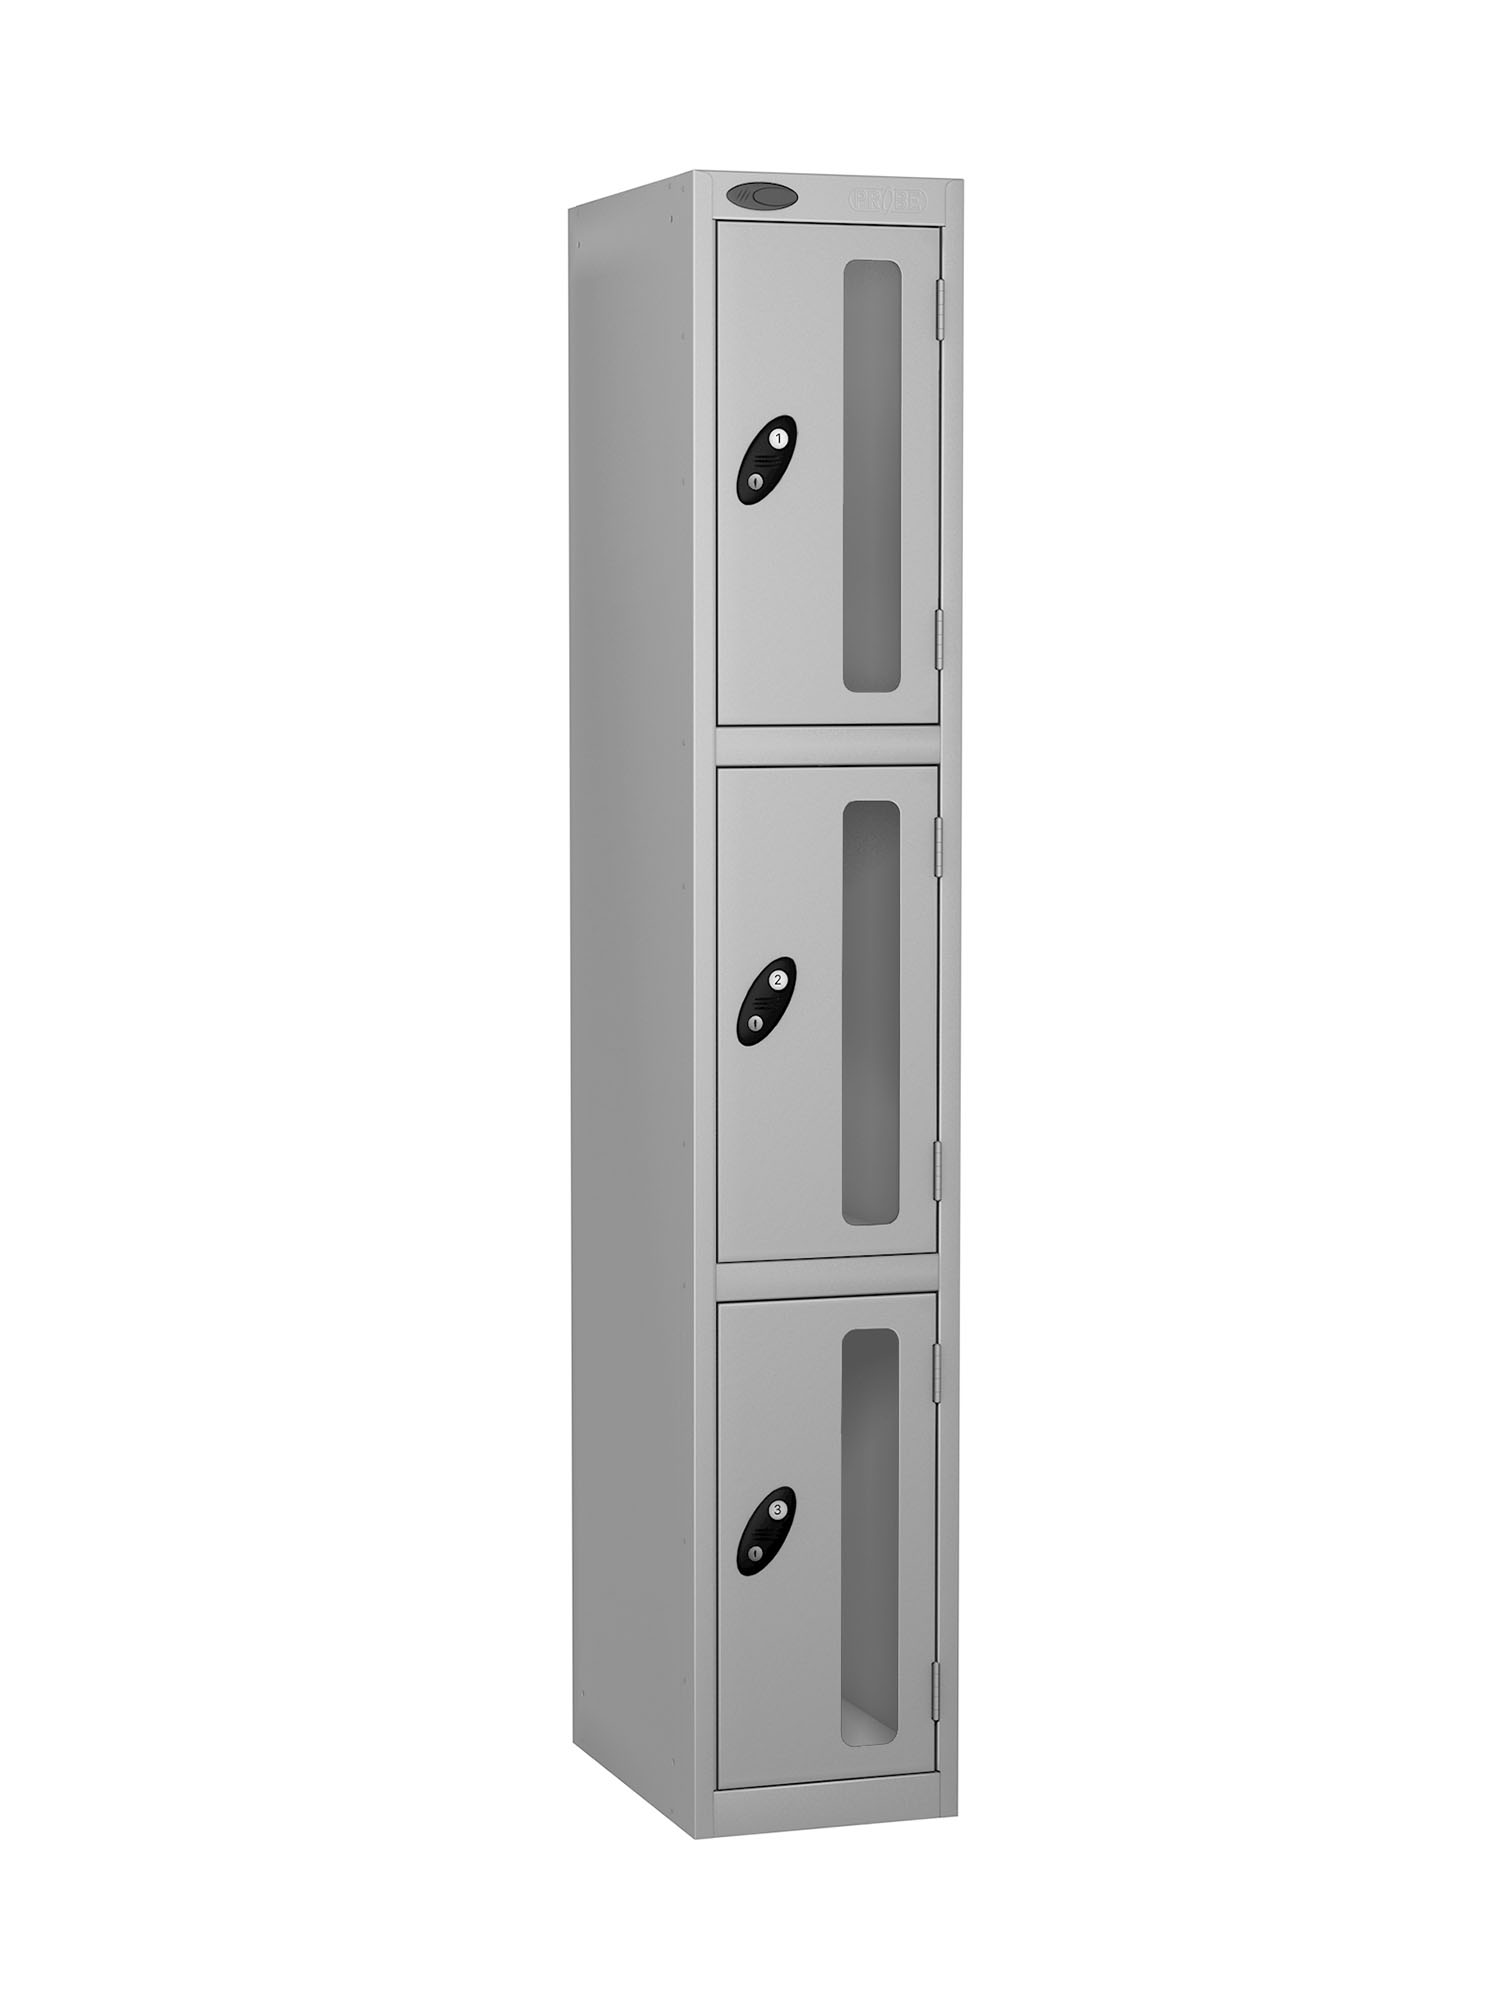 Probe 3 doors vision panel anti-stock theft locker silver